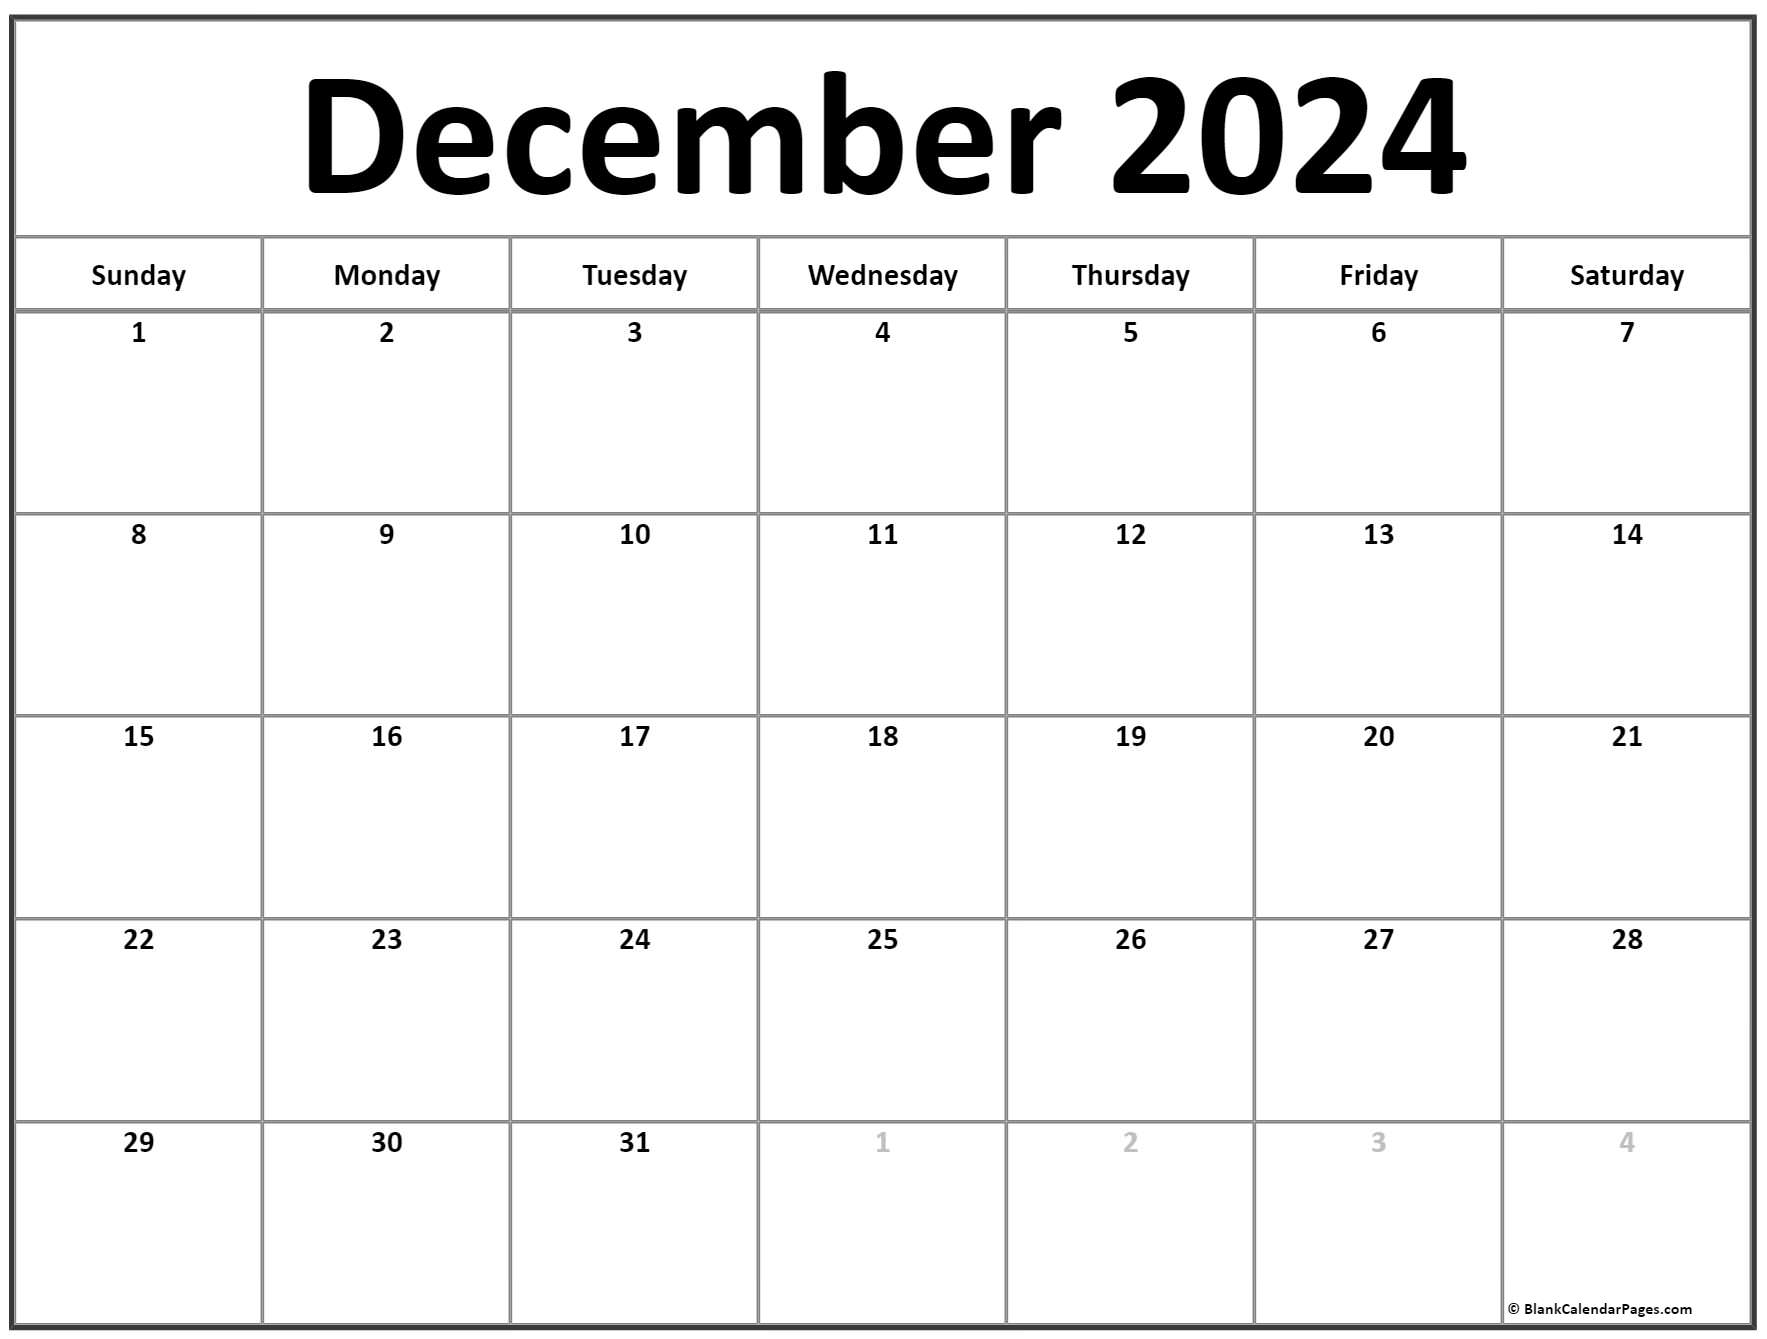 December 2022 calendar free printable calendar